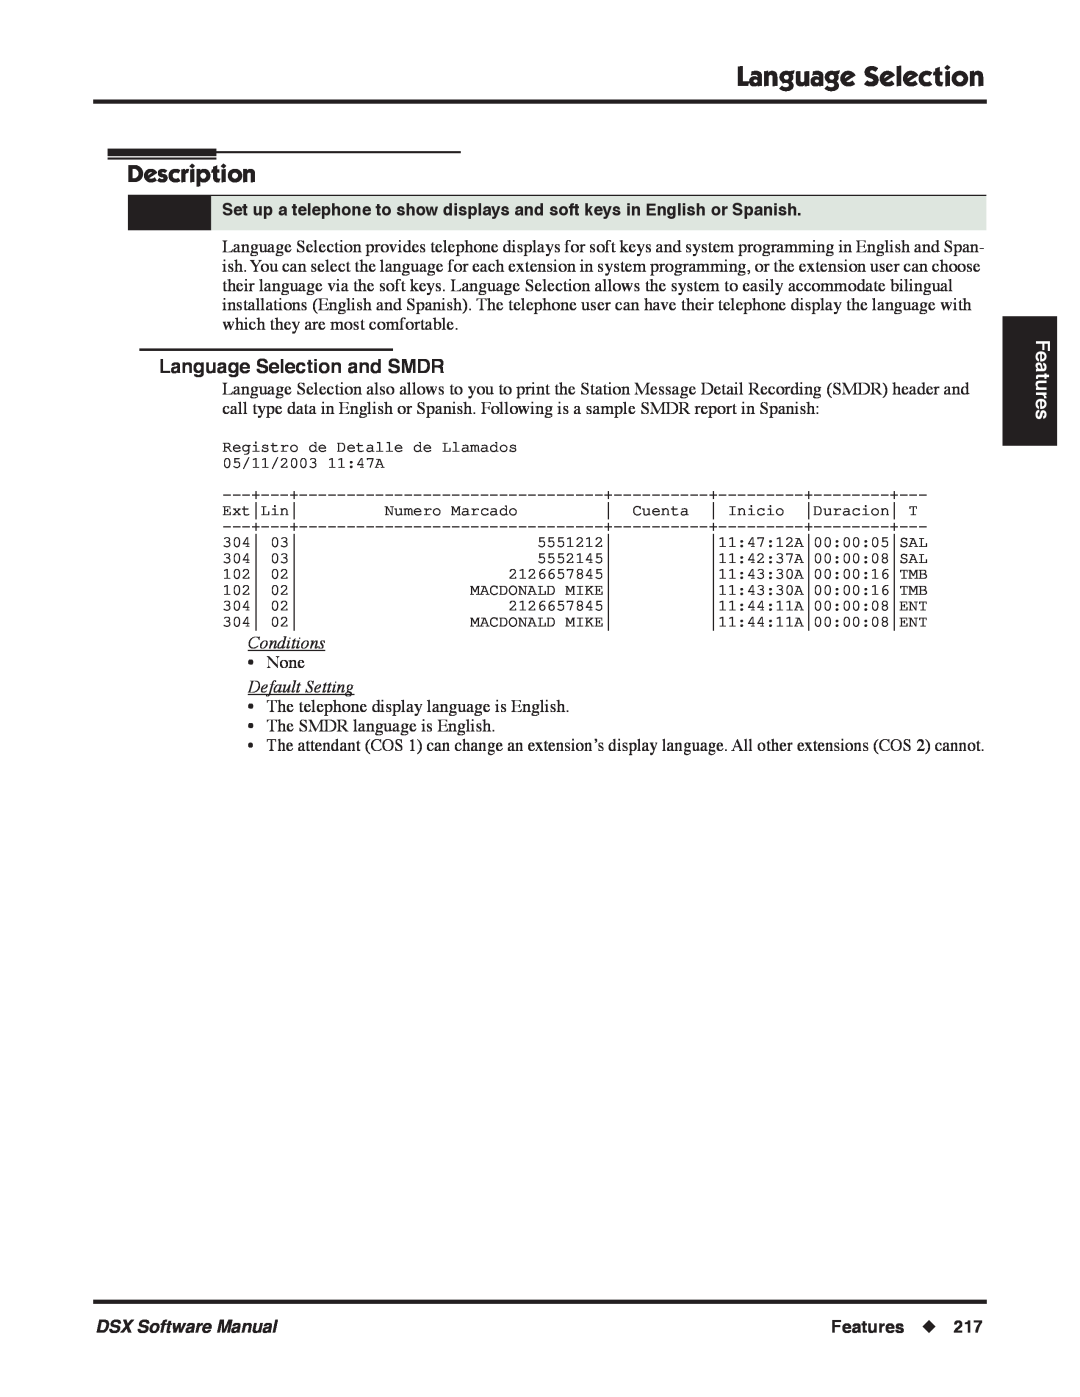 NEC P, N 1093100 Description, Language Selection and SMDR, Features, Conditions, Default Setting, DSX Software Manual 